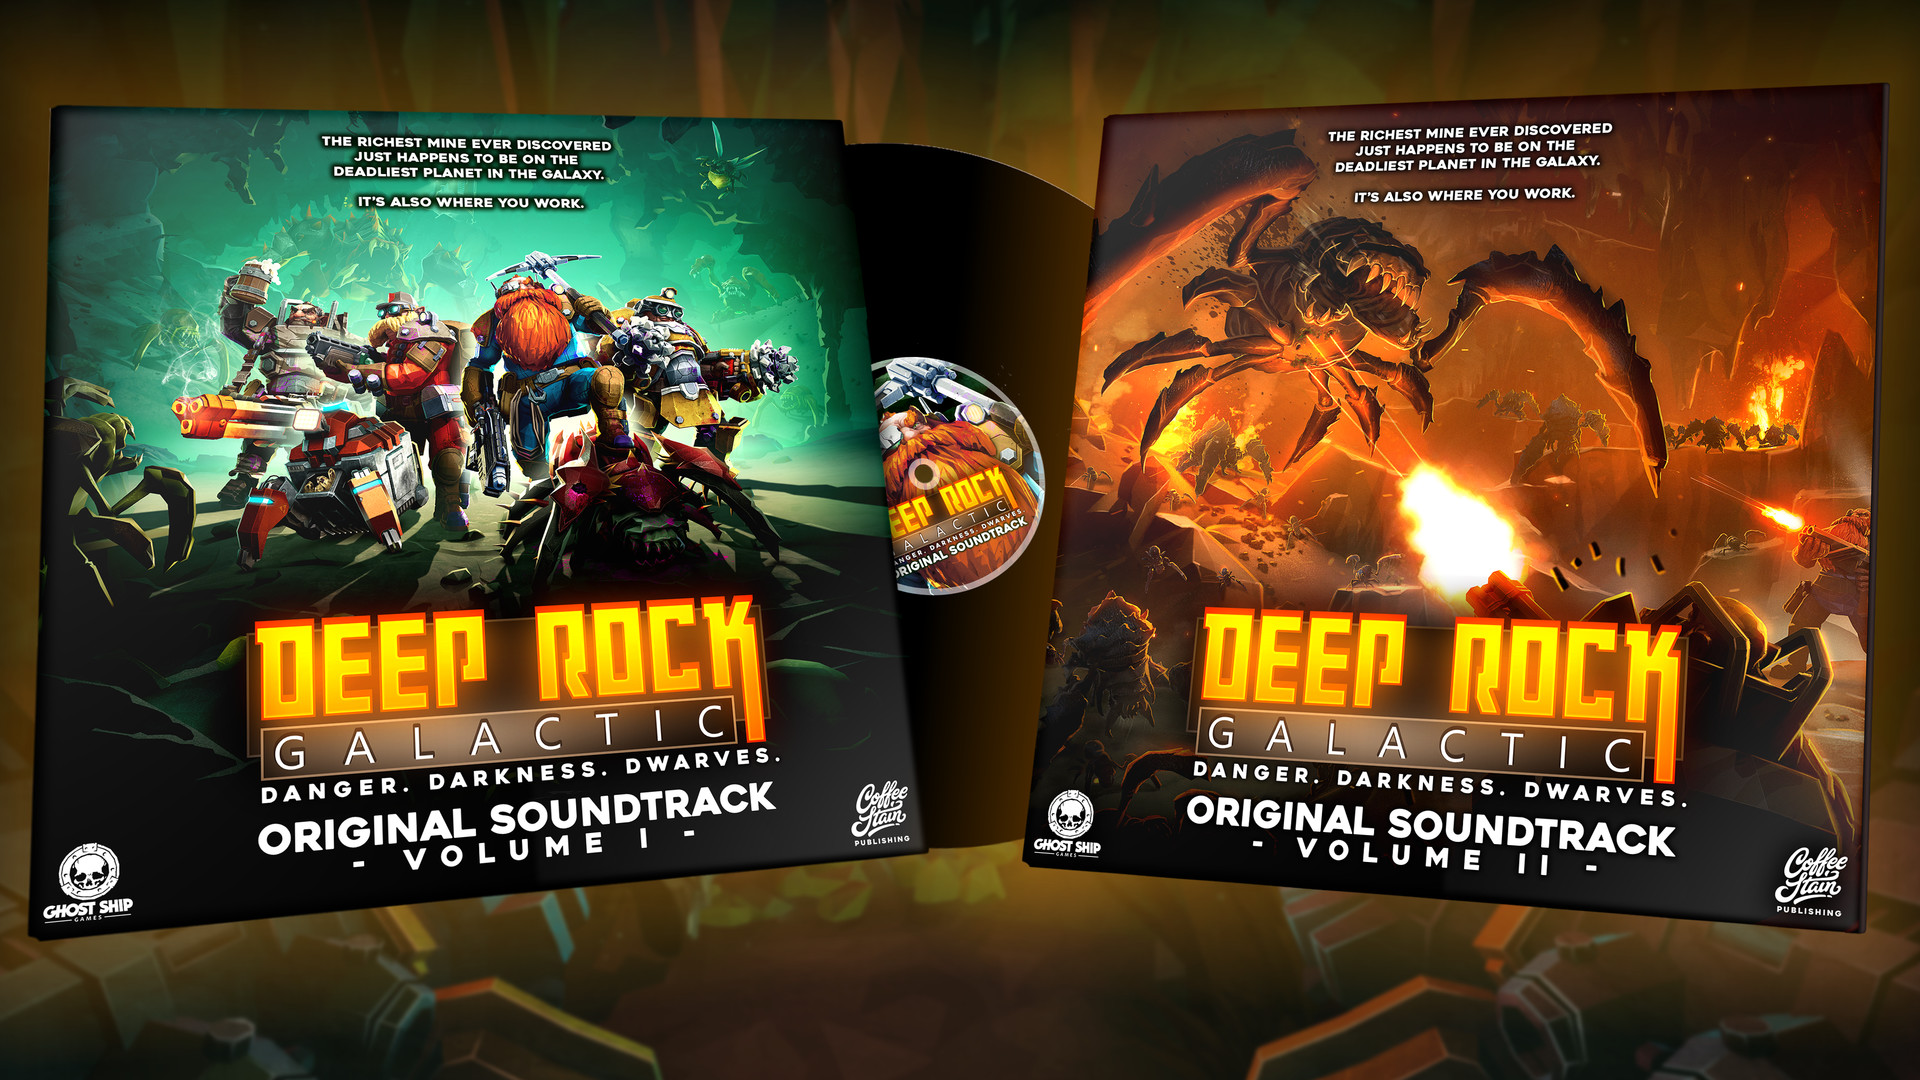 Deep Rock Galactic - Original Soundtrack Volume I + II Steam CD Key 1.01 $